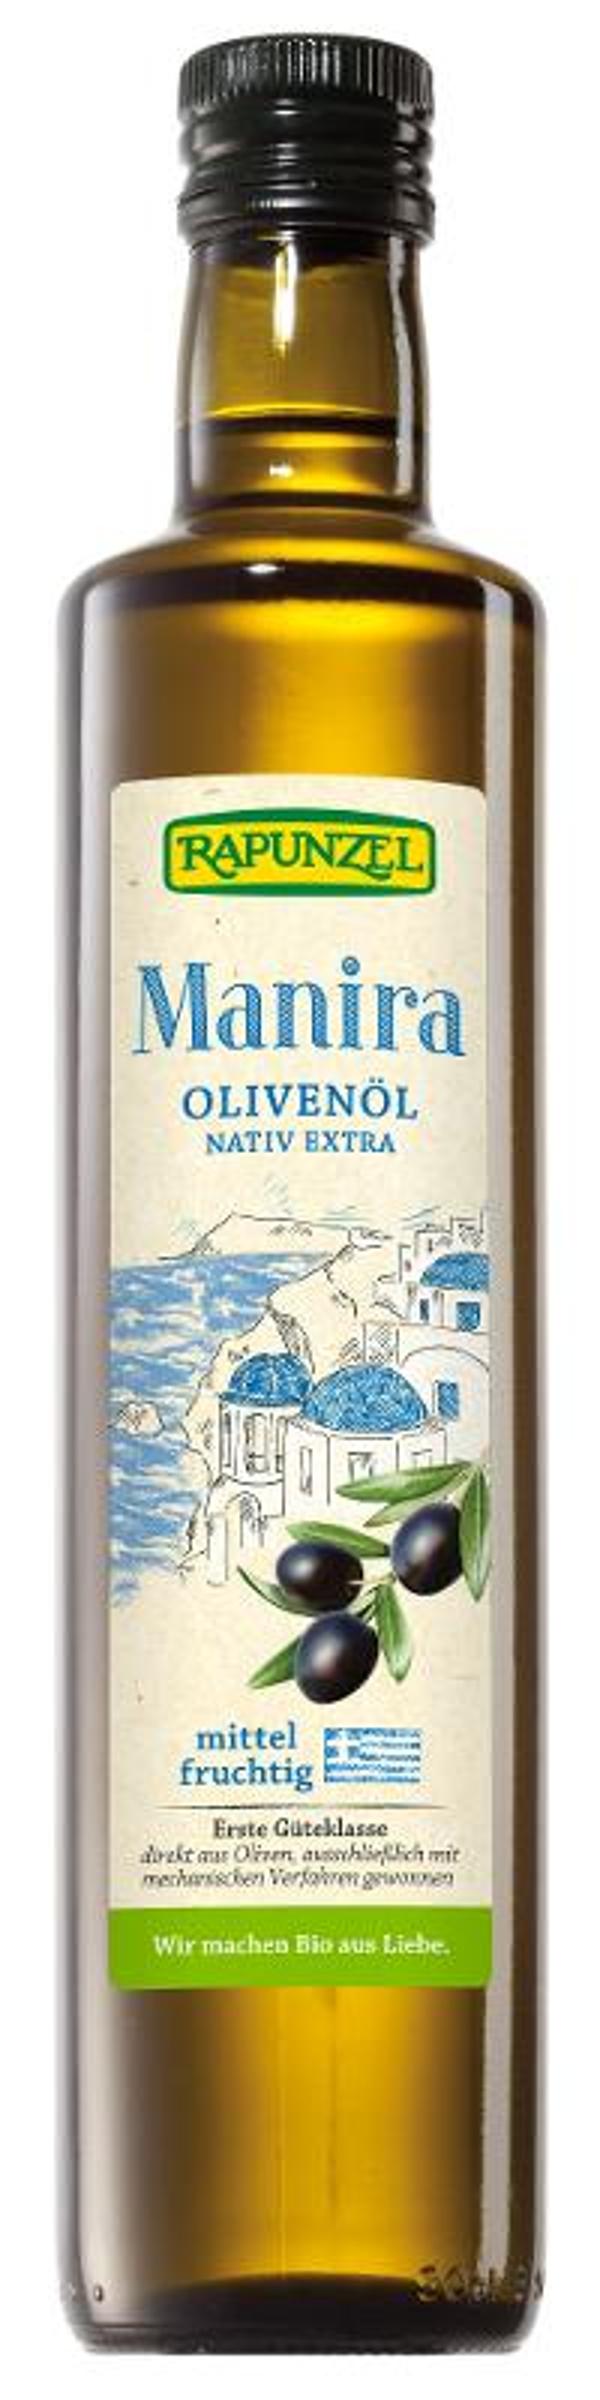 Produktfoto zu Olivenöl MANIRA, nativ extra